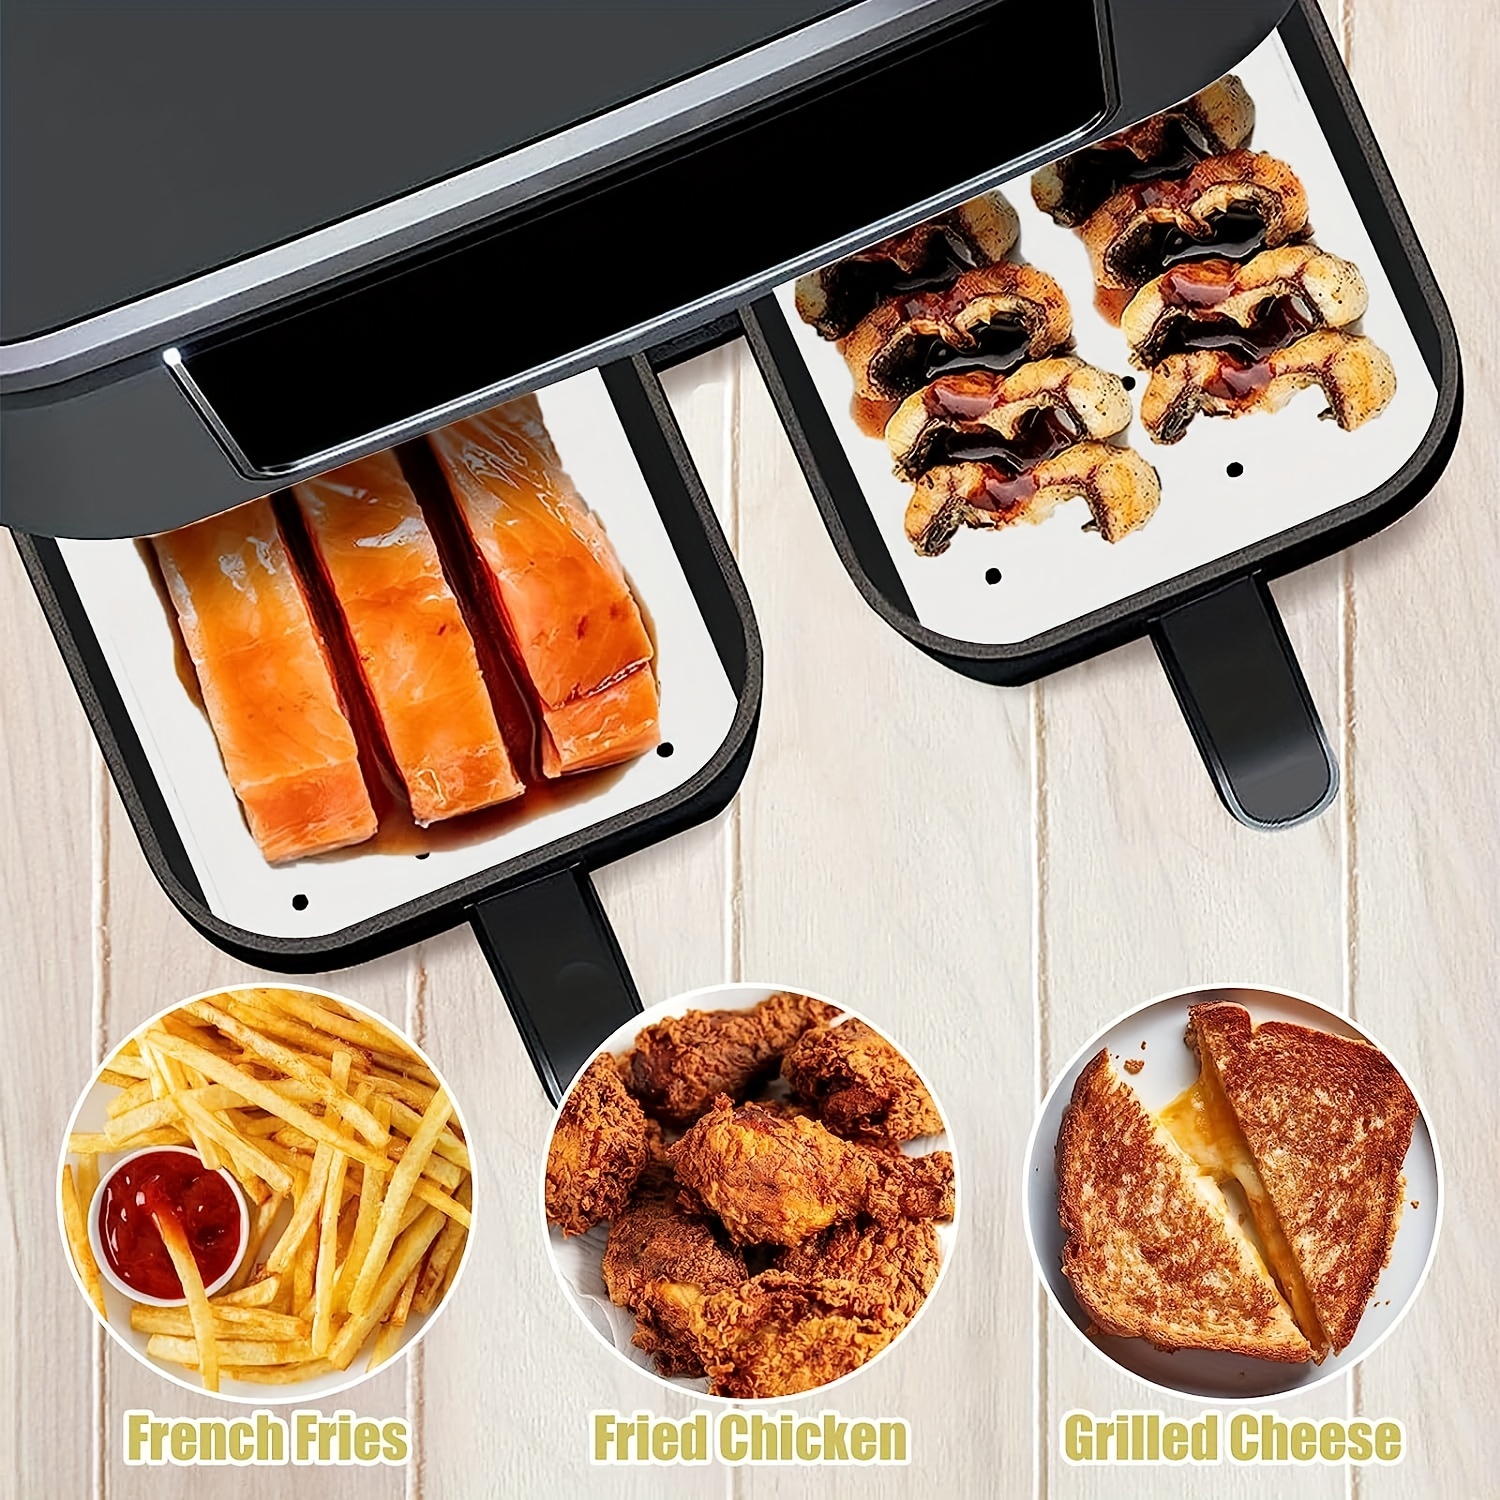 100Pcs Air Fryer Liners Air Fryer Accessories for Ninja Foodi Dual Air Fryer